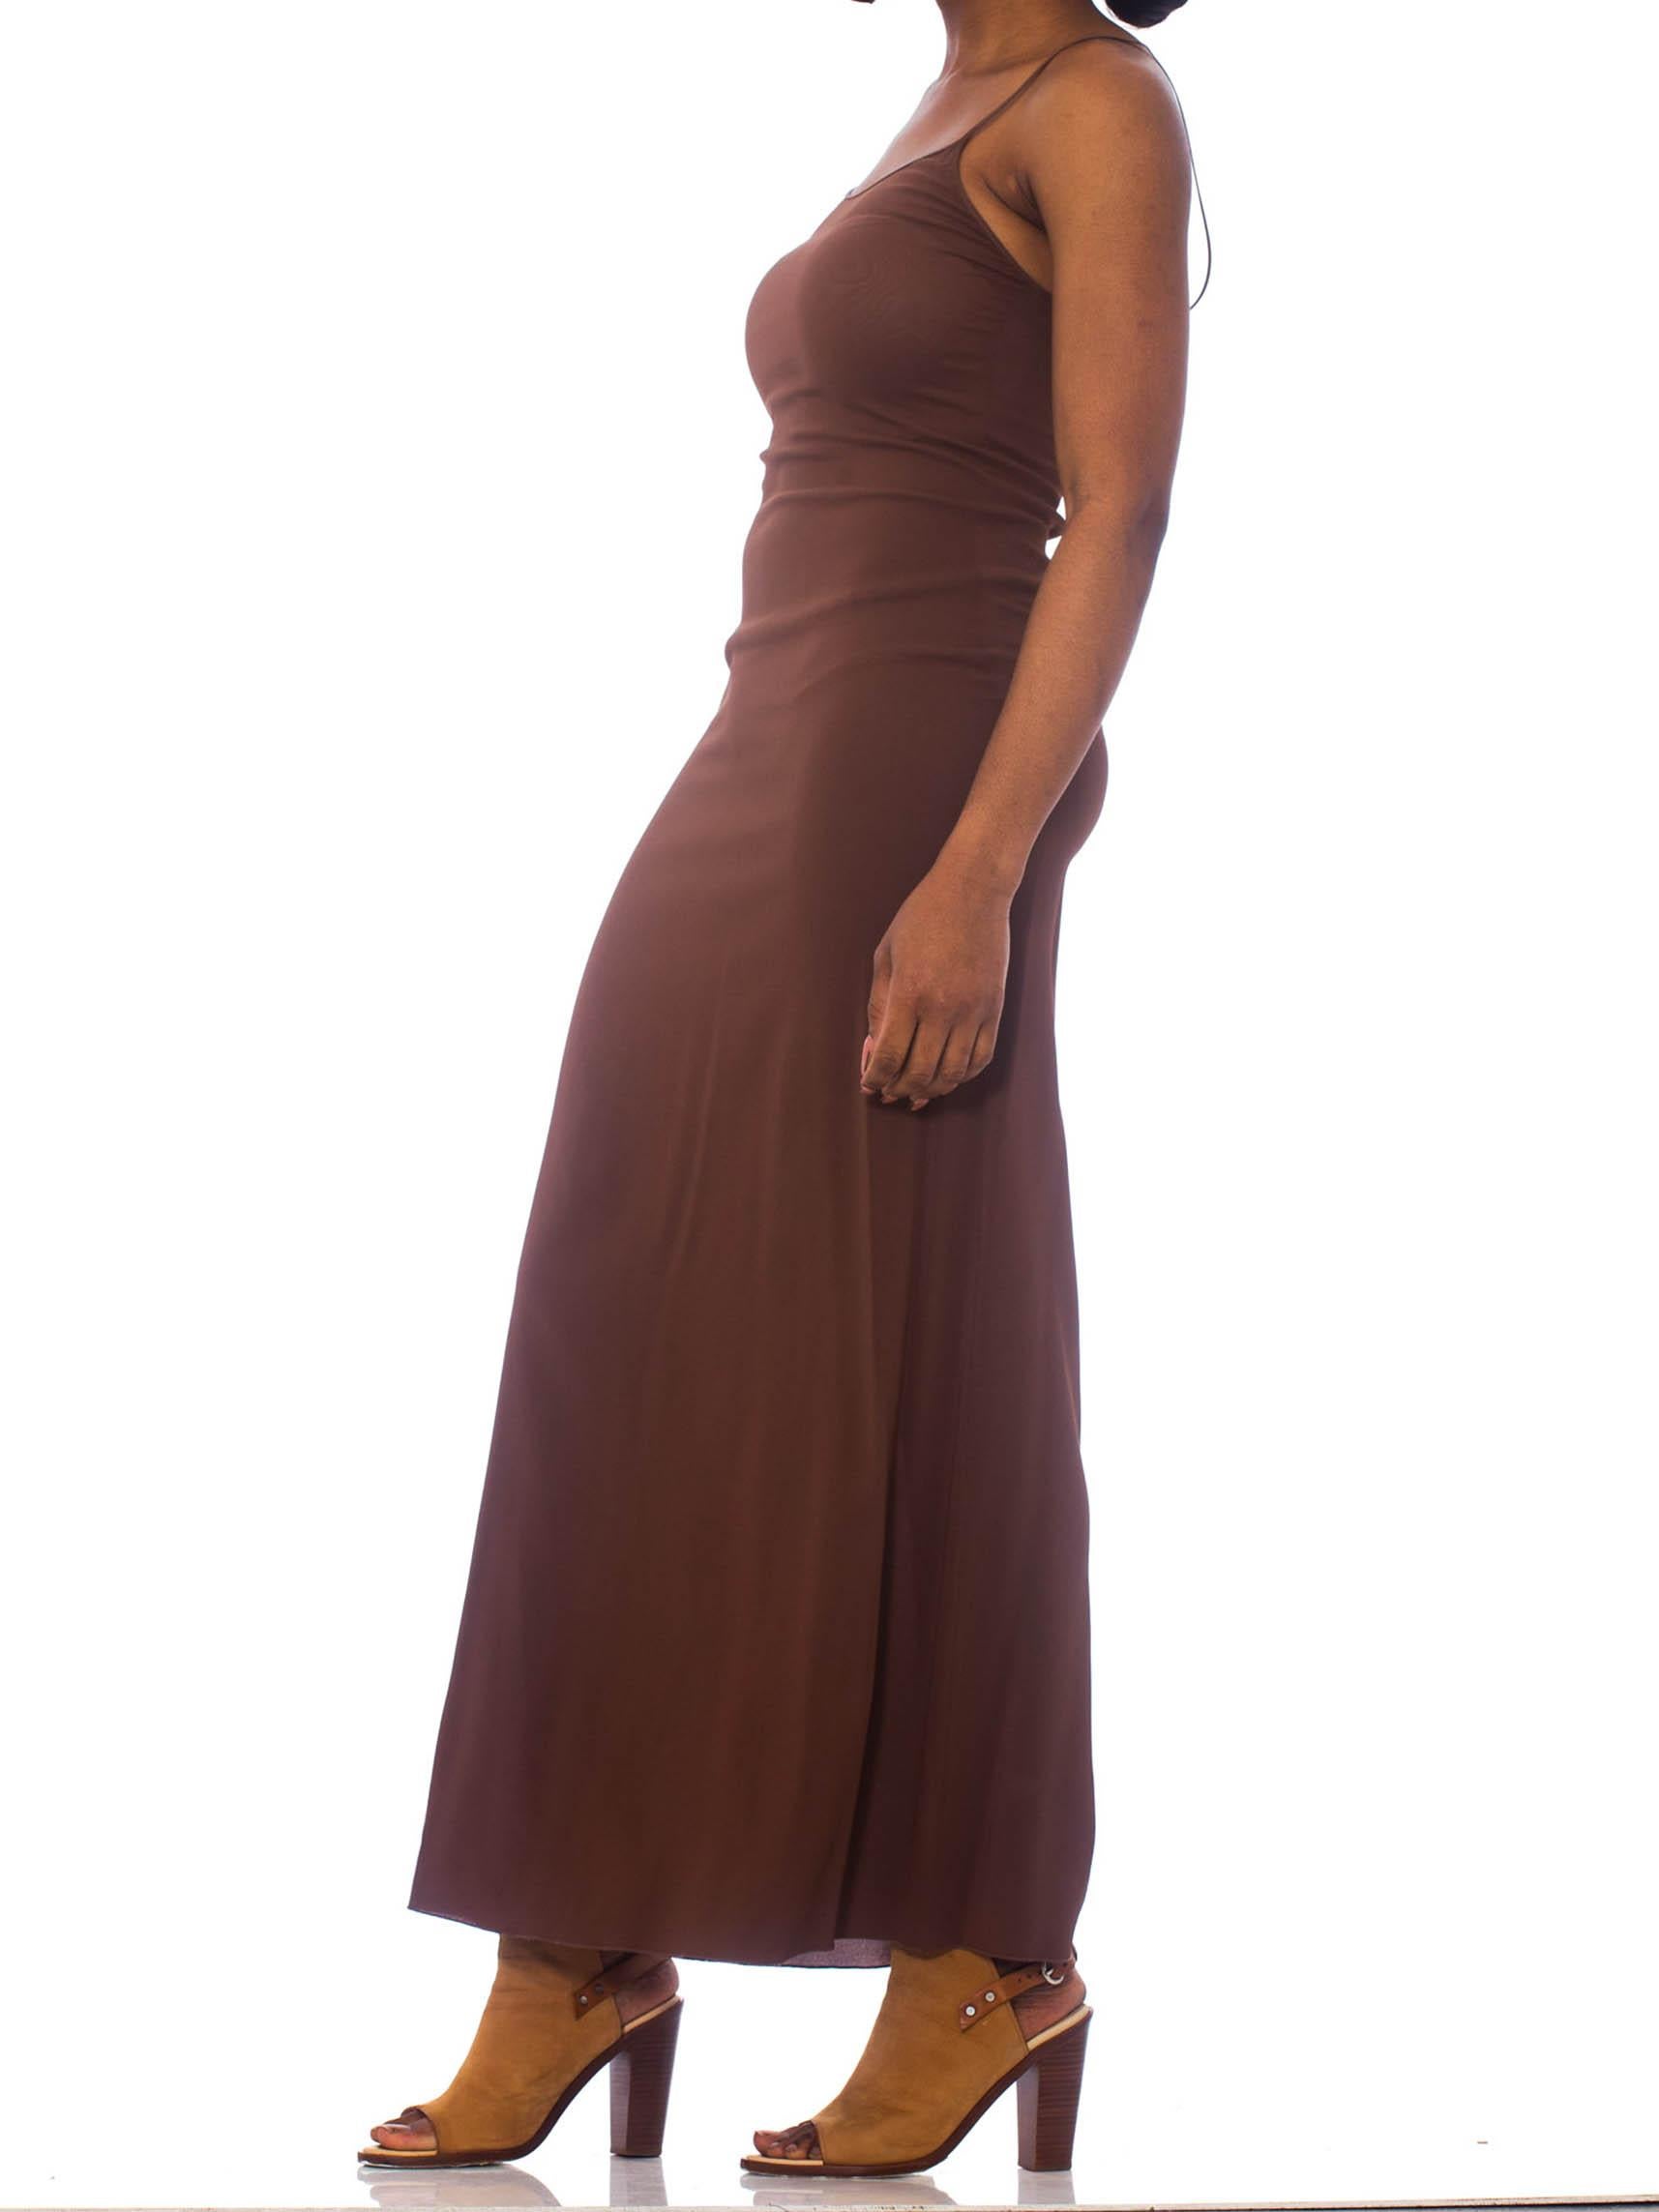 jean paul gaultier brown dress